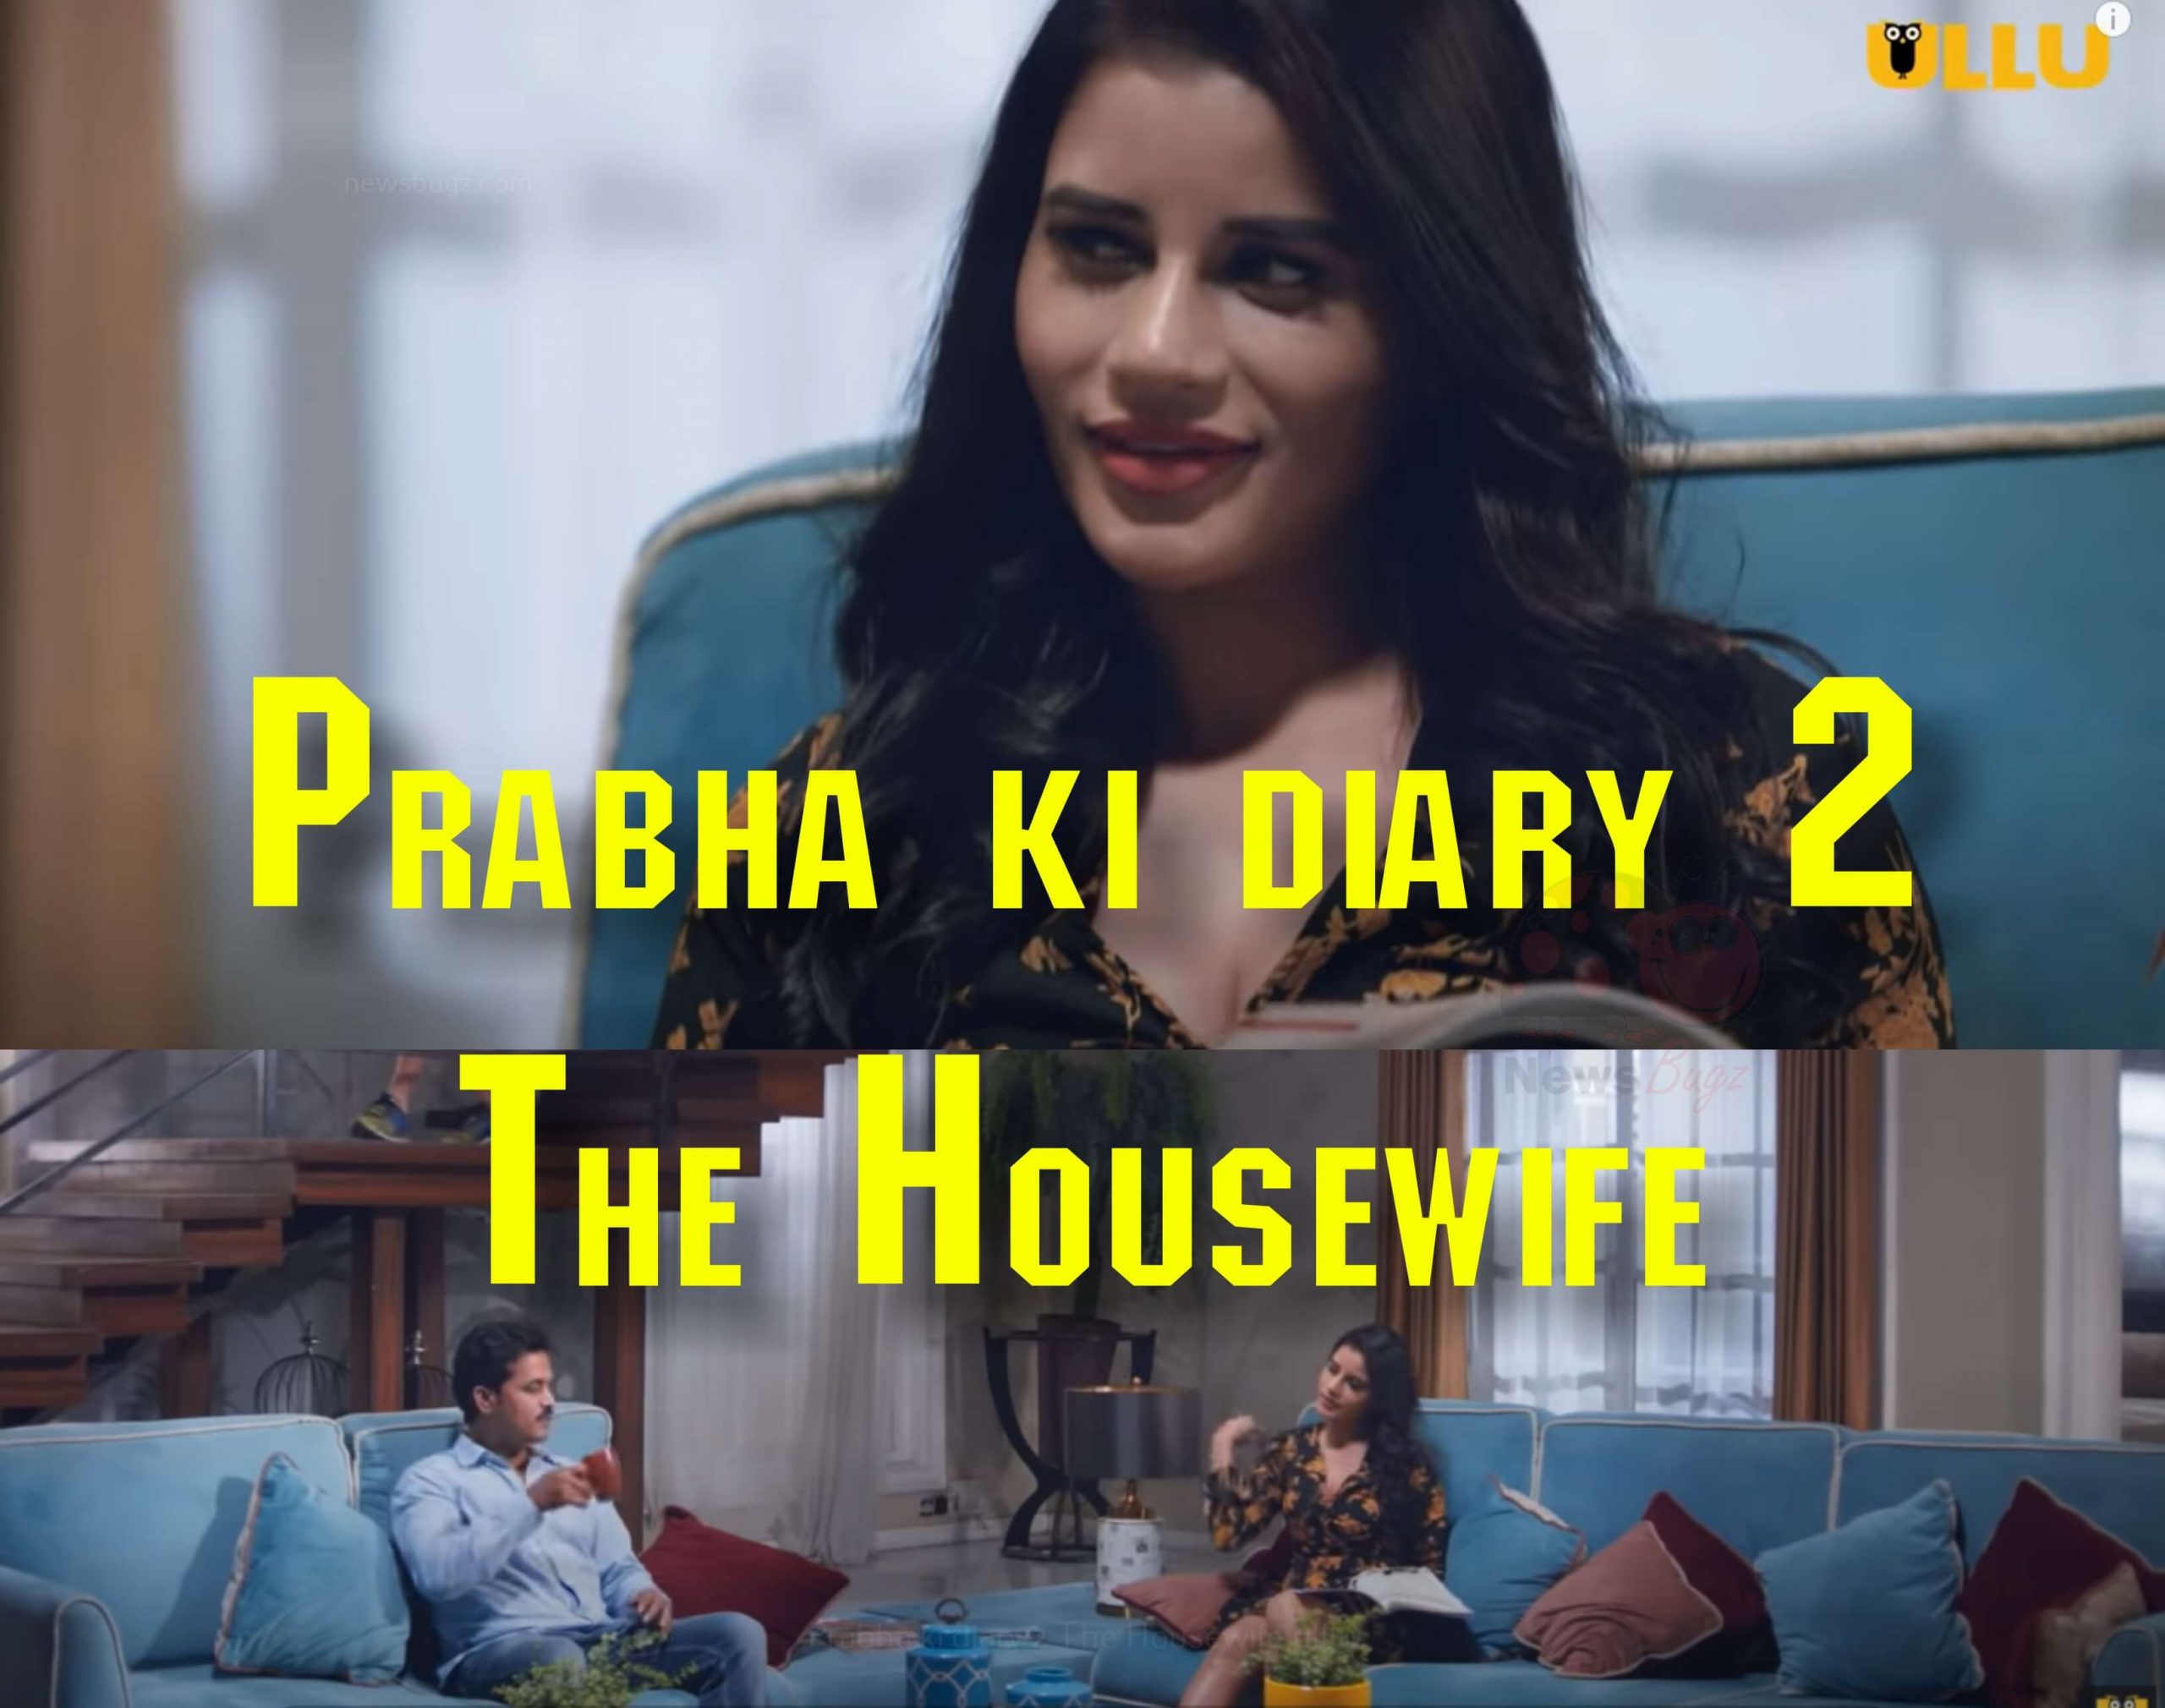 Prabha ki diary 2 The housewife ullu